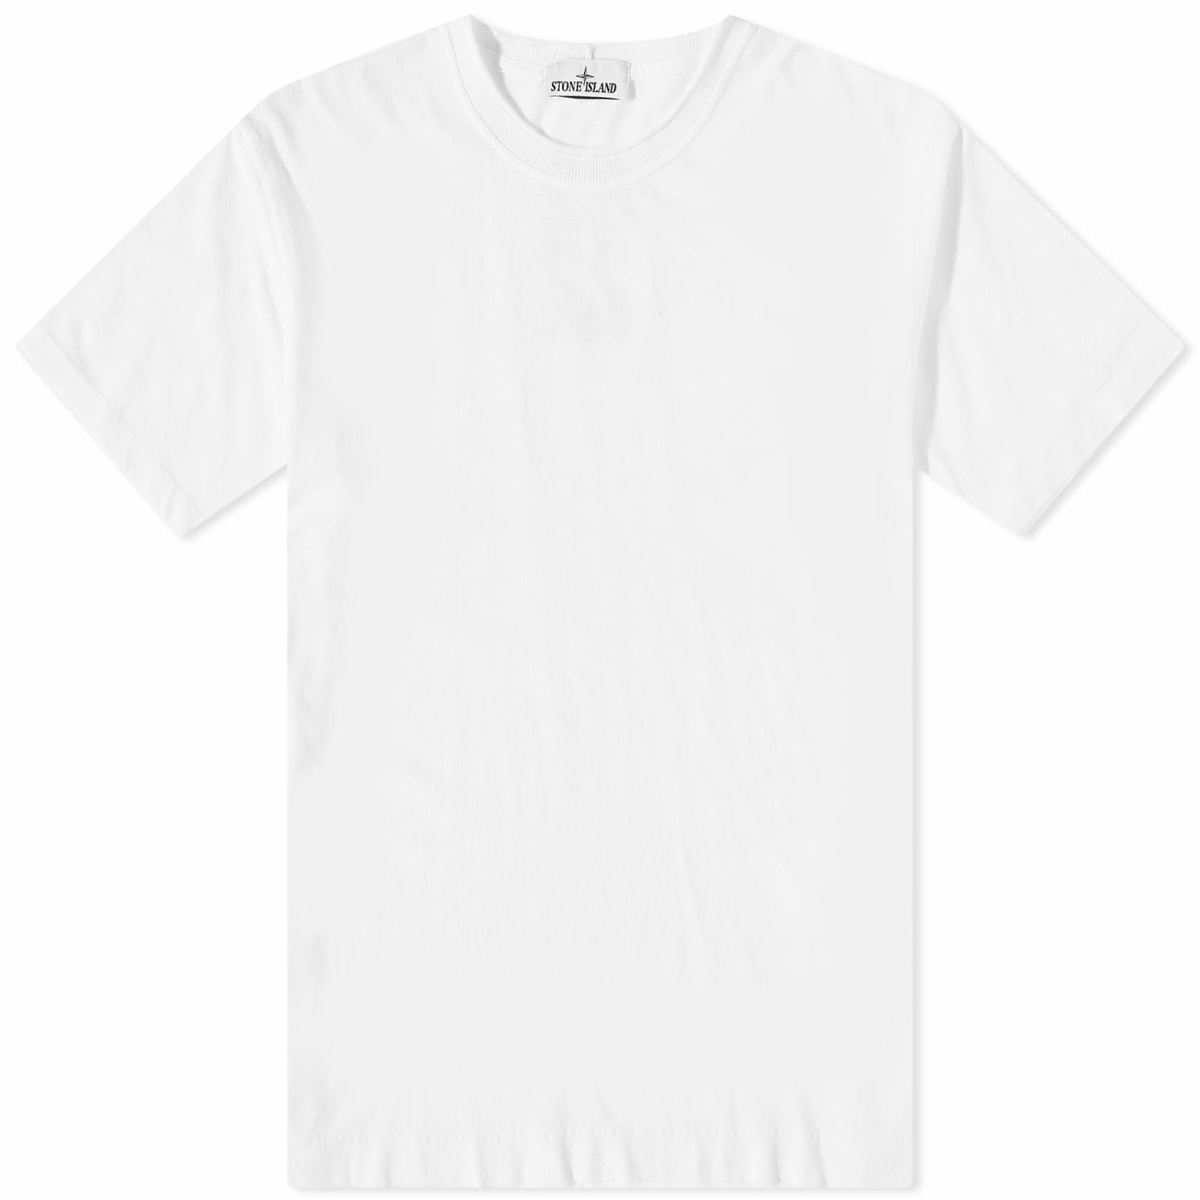 Stone Island 40th Anniversary Garment Dyed T-Shirt in White Stone Island